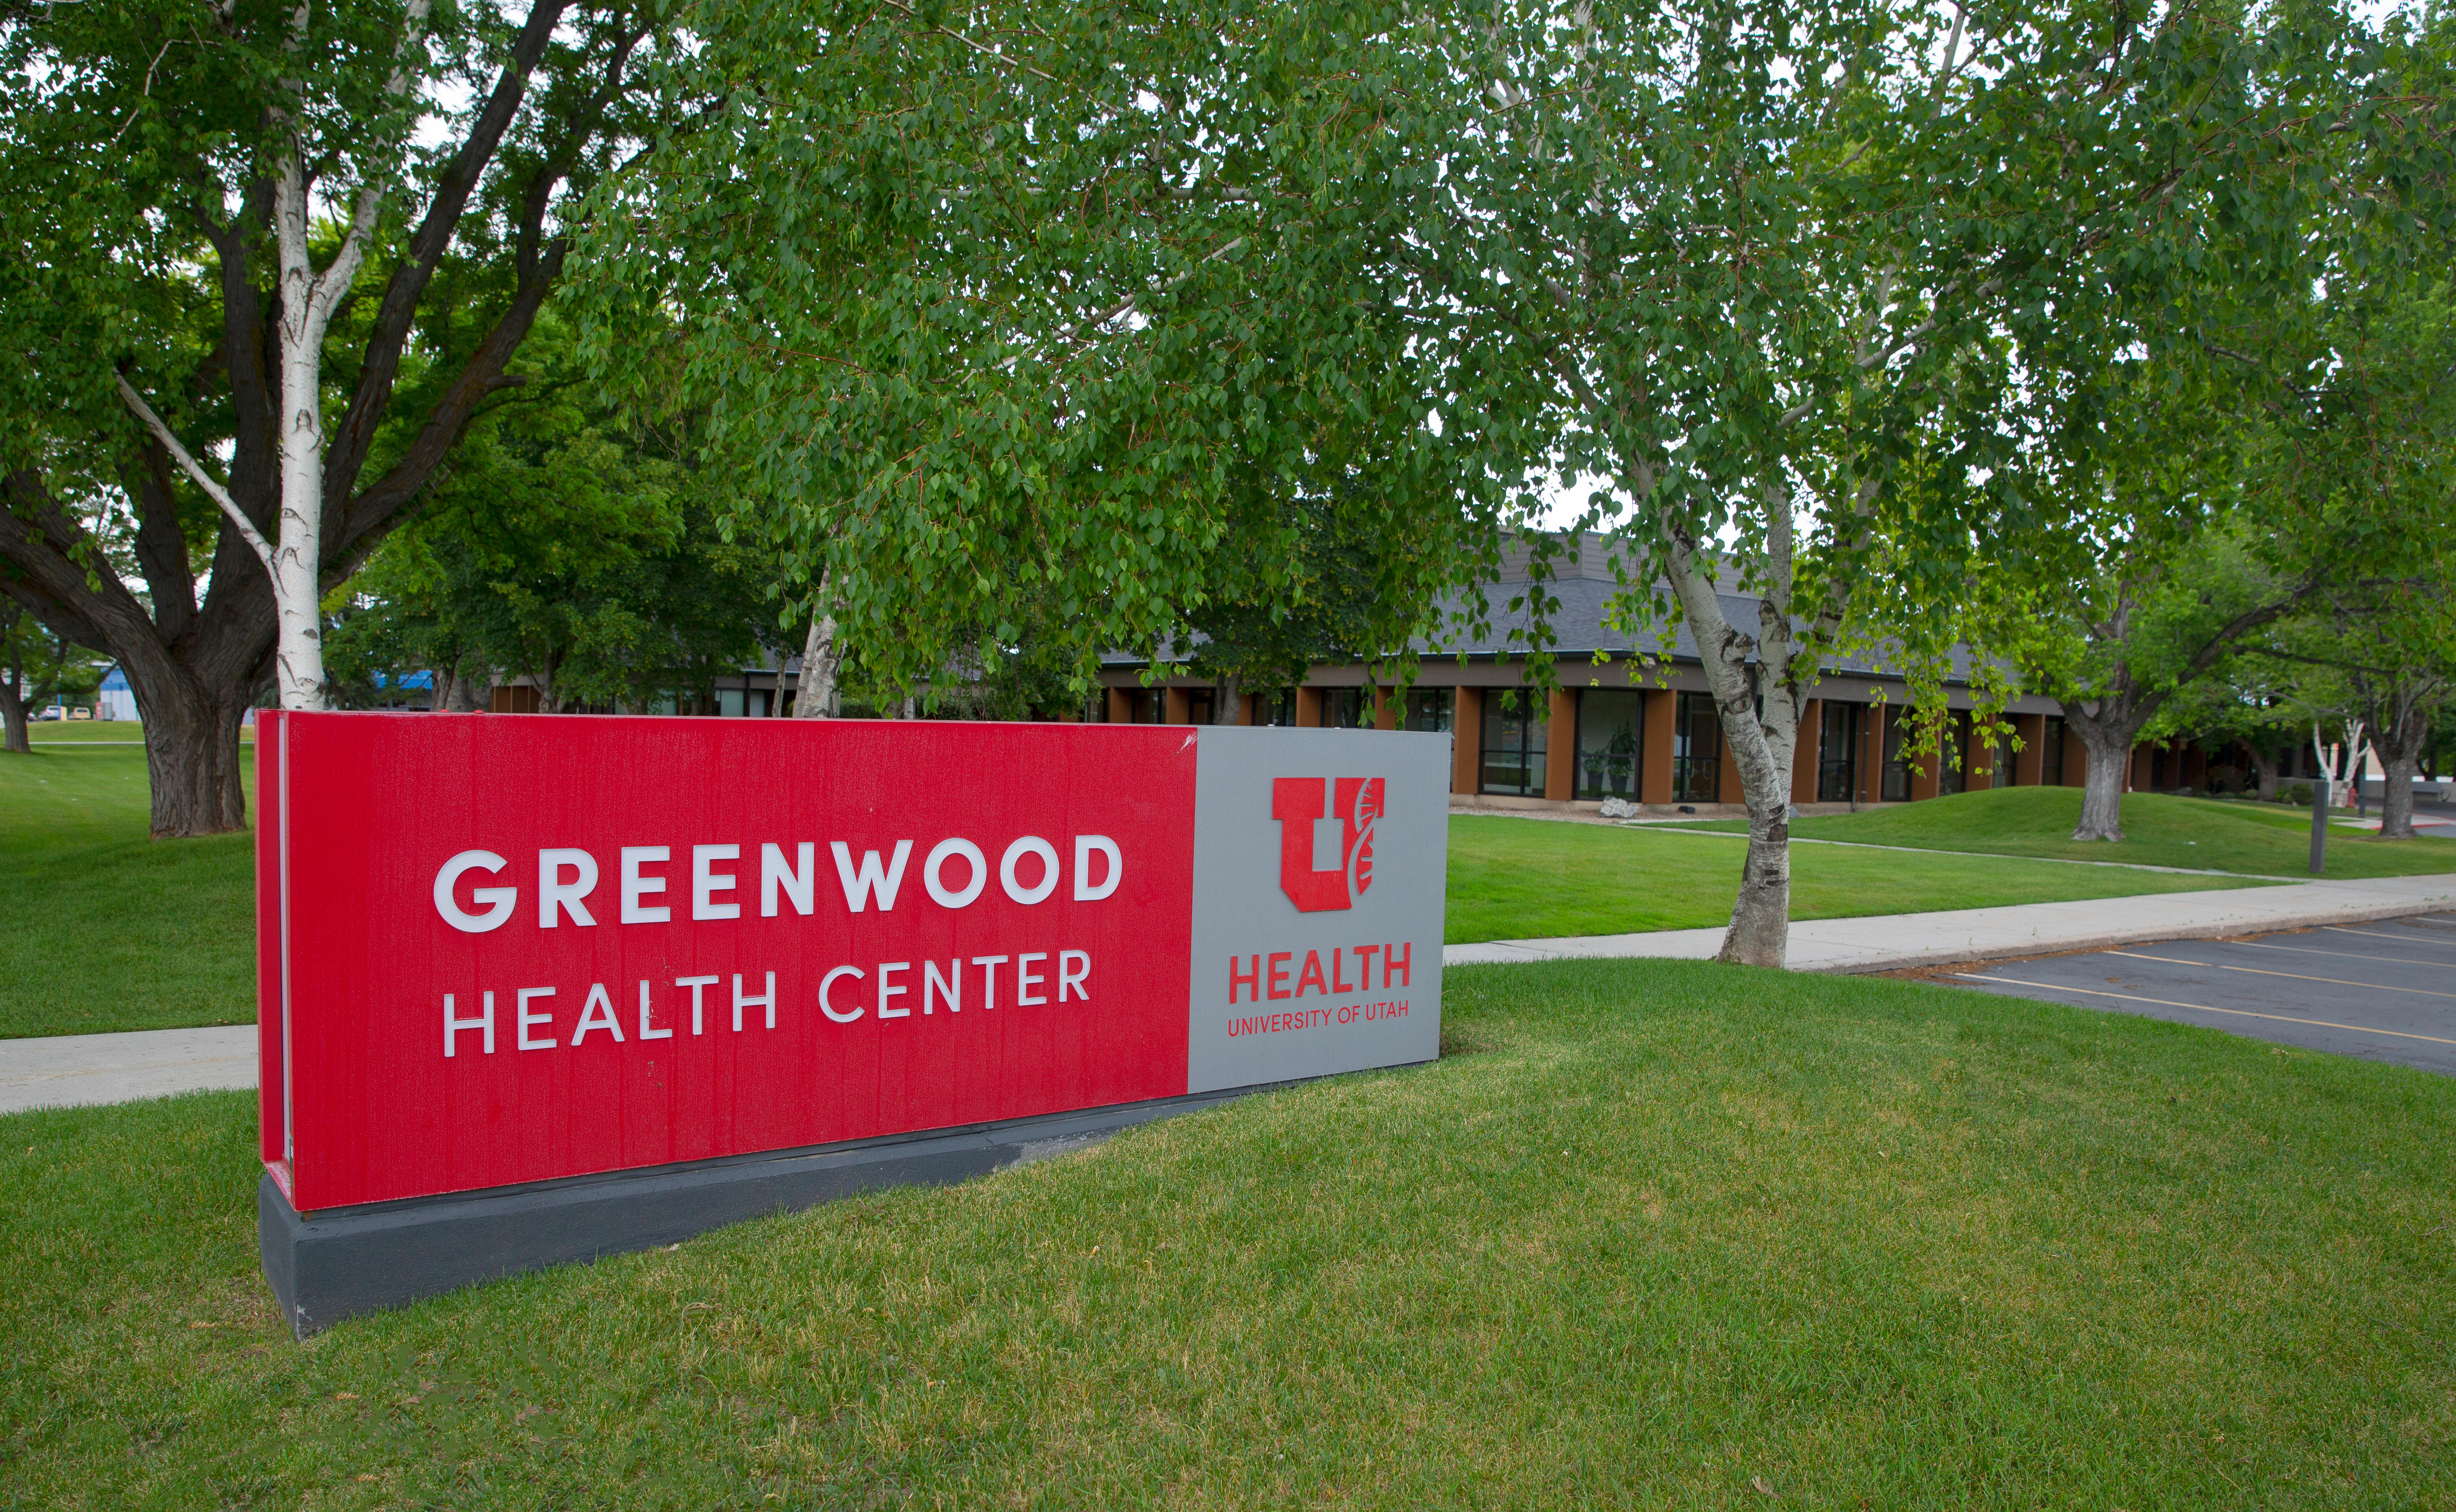 U of U Health Greenwood Urgent Care - Midvale, UT 84047 - (801)213-9400 | ShowMeLocal.com